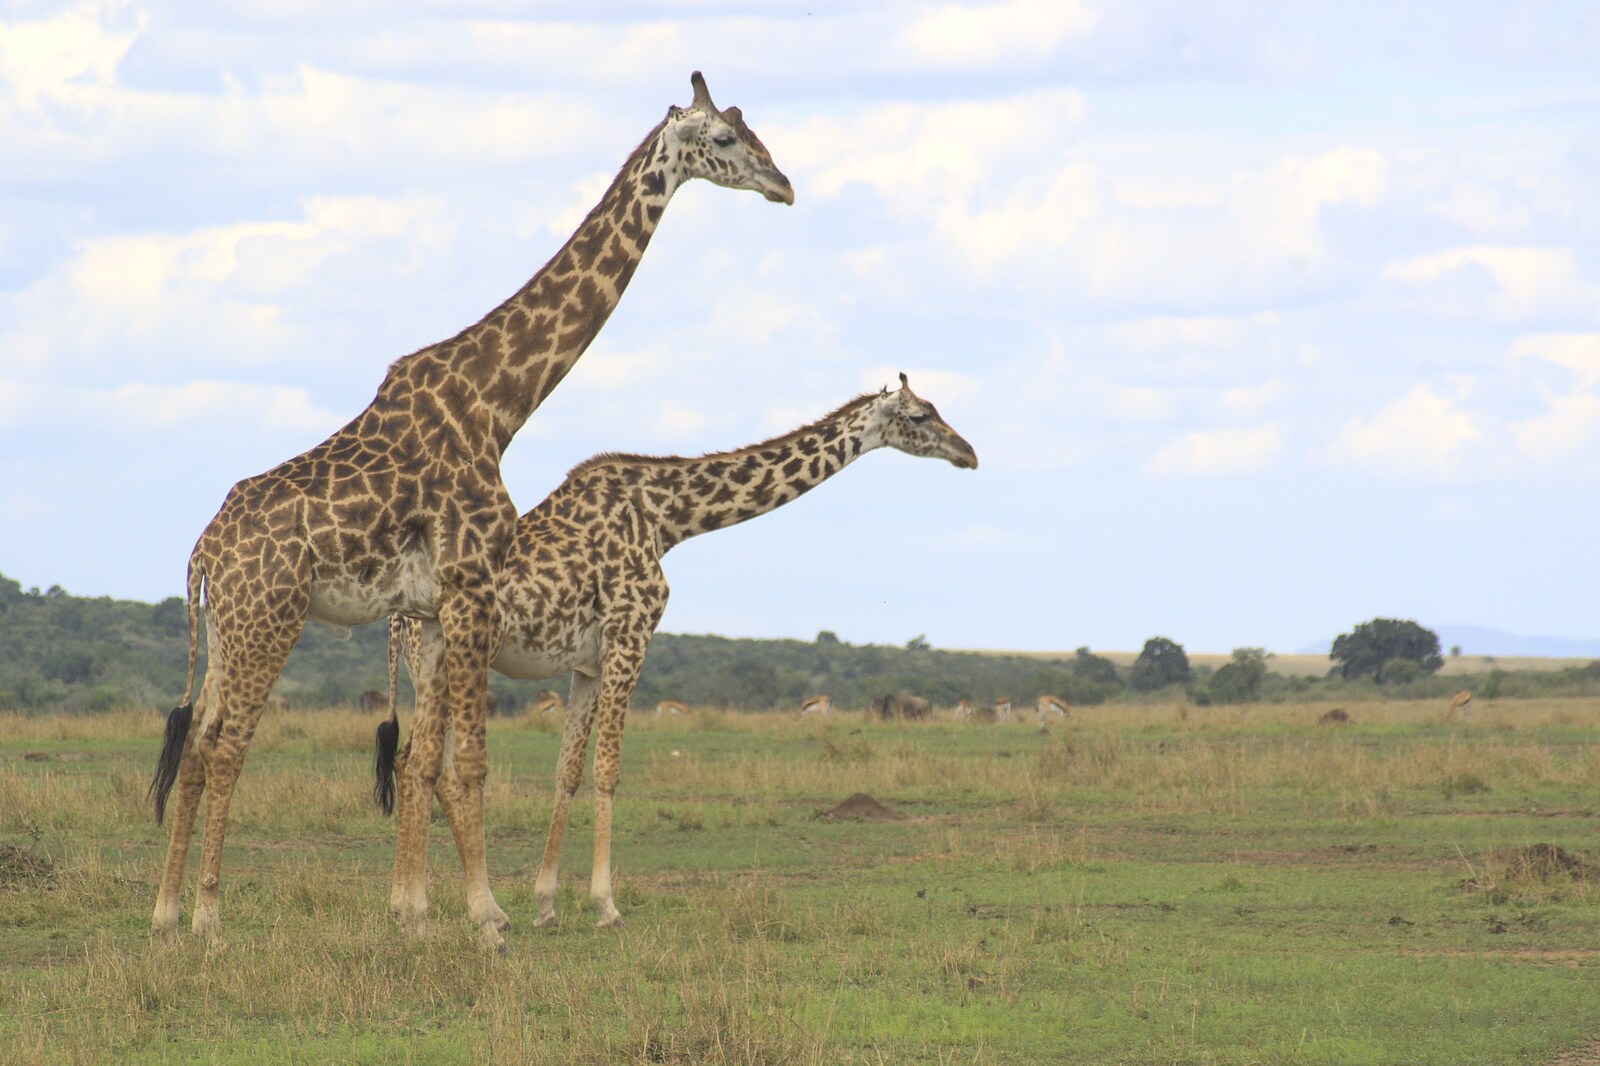 A pair of giraffe from Maasai Mara Safari and a Maasai Village, Ololaimutia, Kenya - 5th November 2010